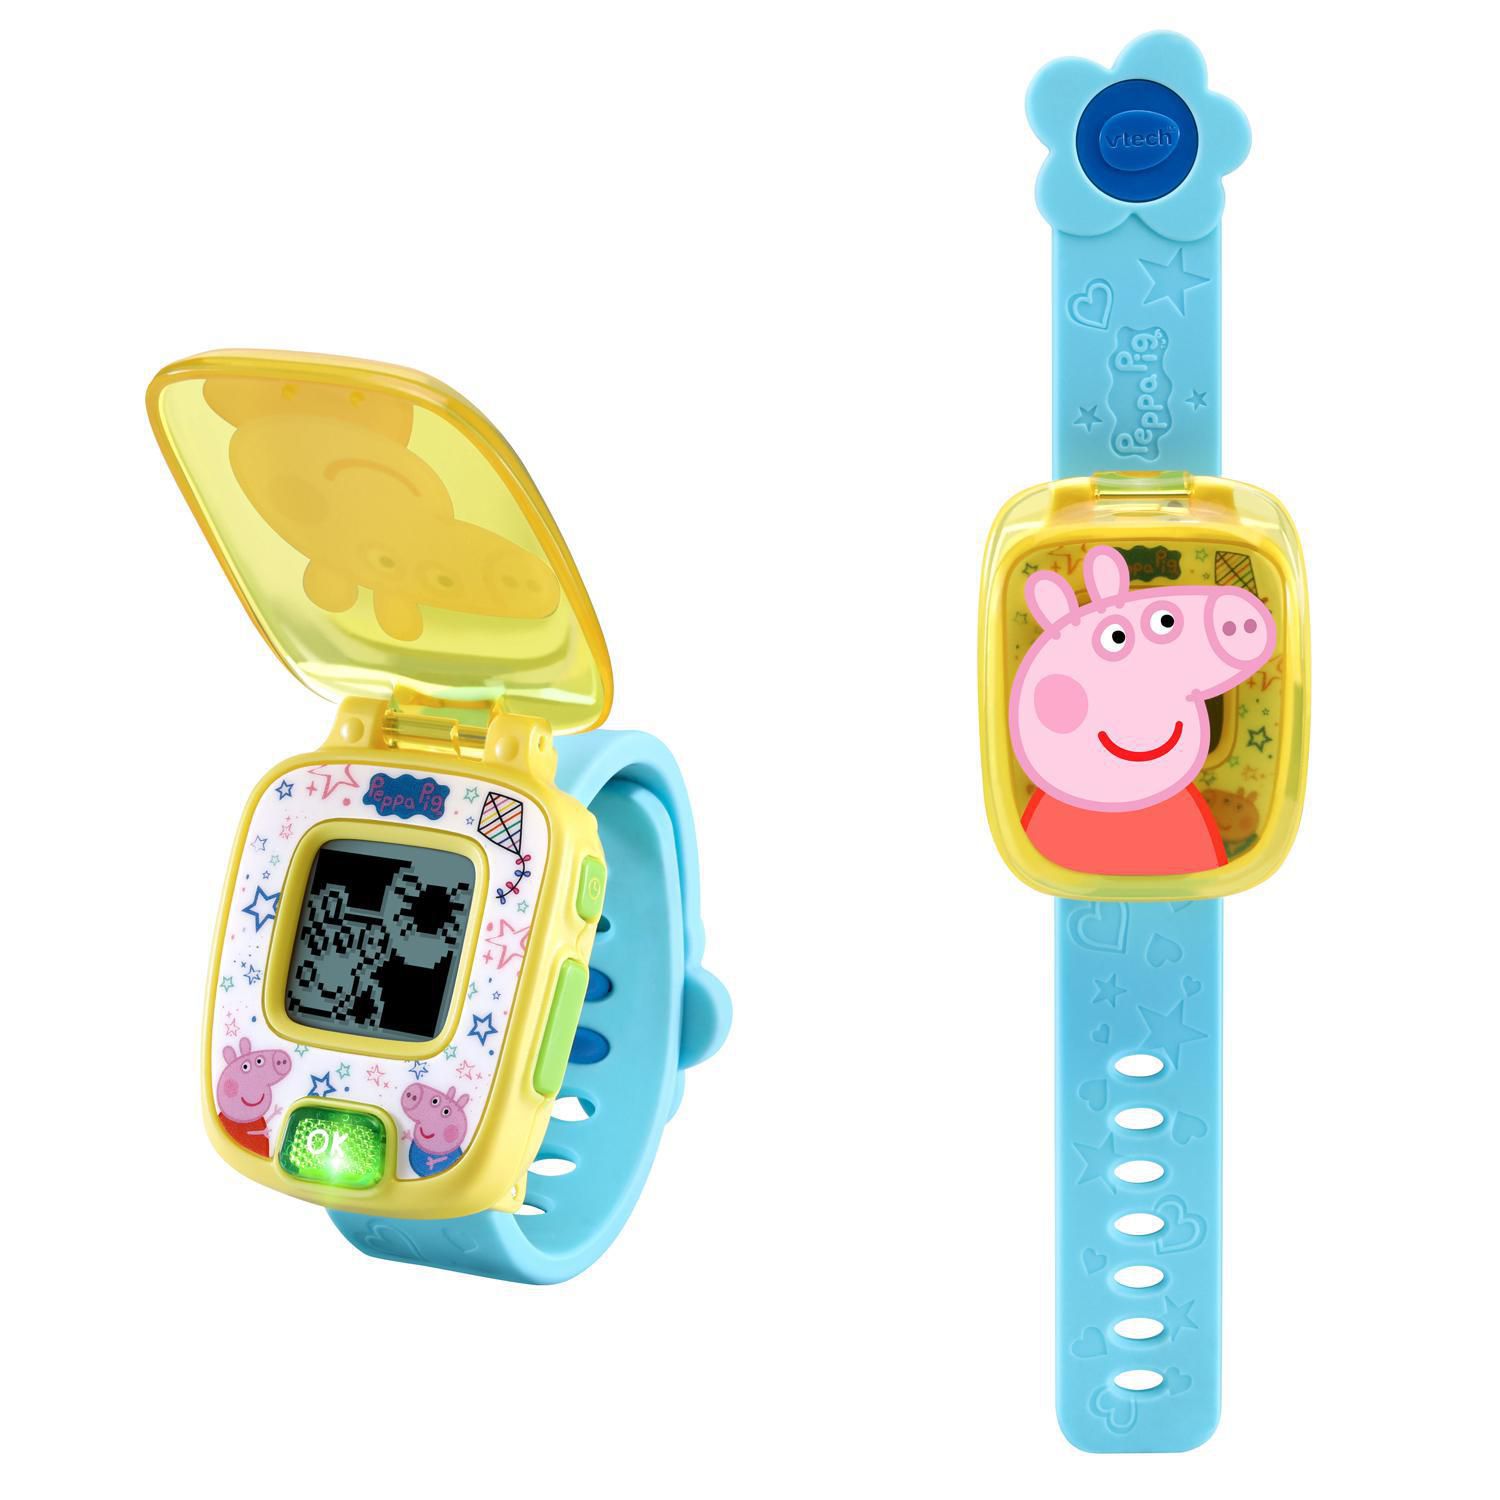 VTech, Peppa Pig Learning Watch, Peppa Pig Toys, Kids' Watch